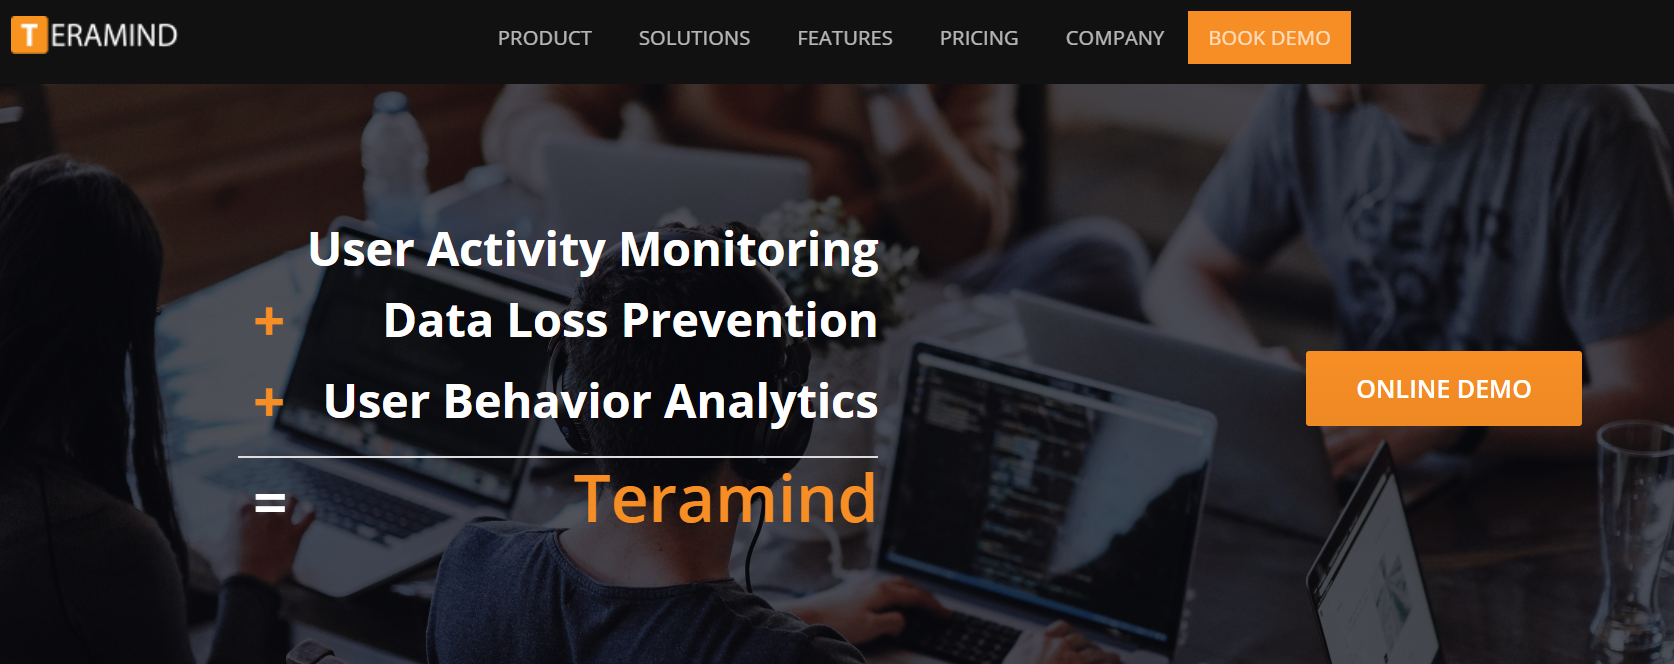 User Activity Monitoring + Data Loss Prevention + User Behavior Analytics = Teramind